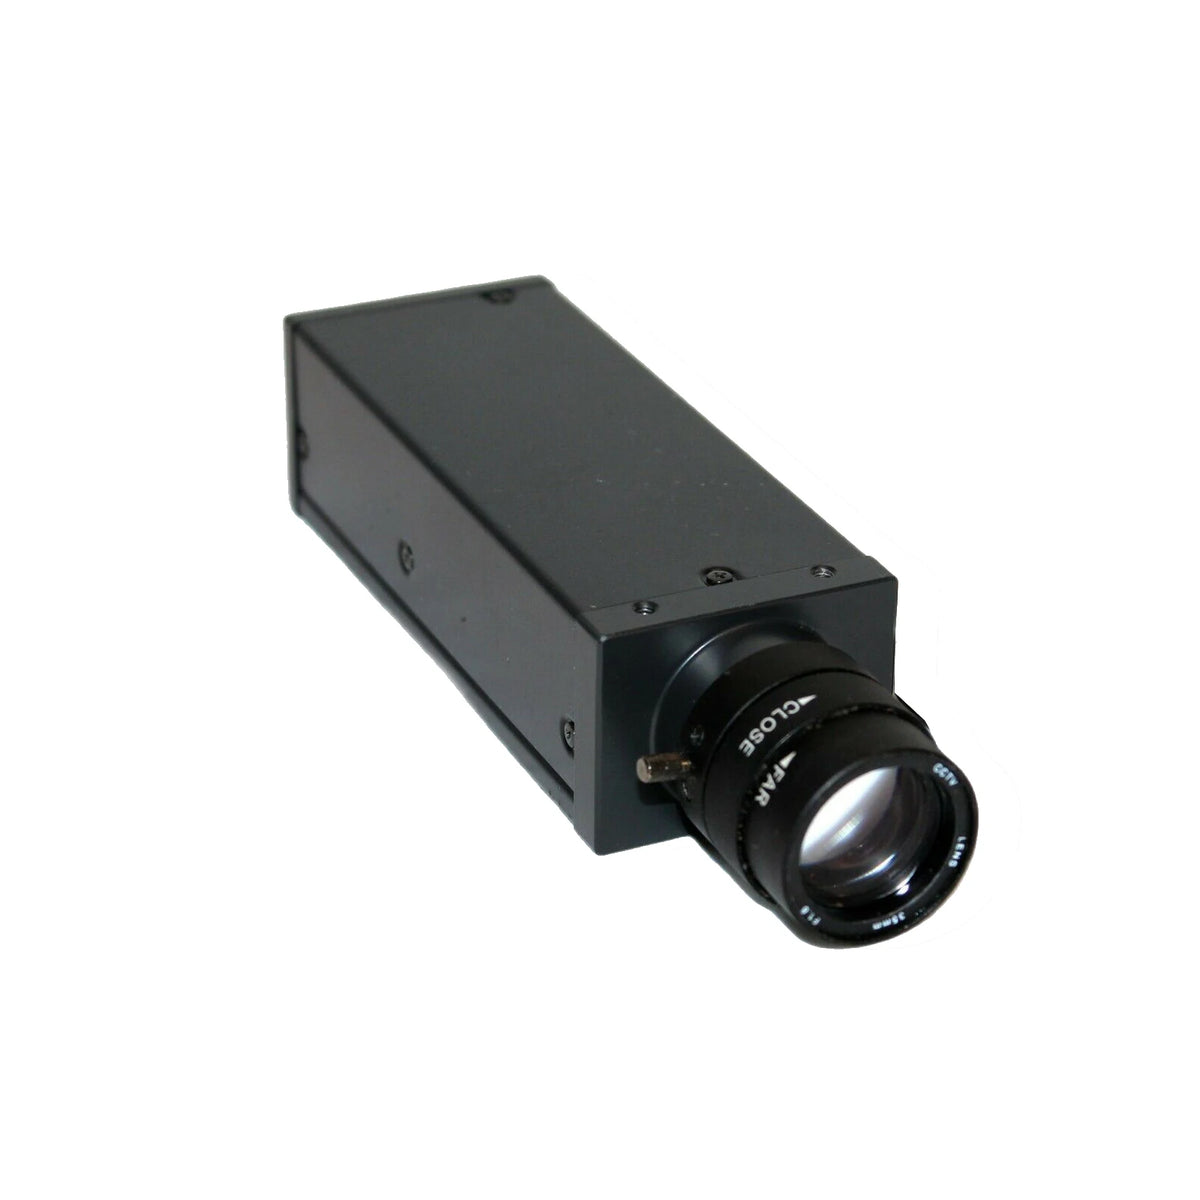 XCD-SX910 / XCDSX910 Digital Interface Industrial Camera